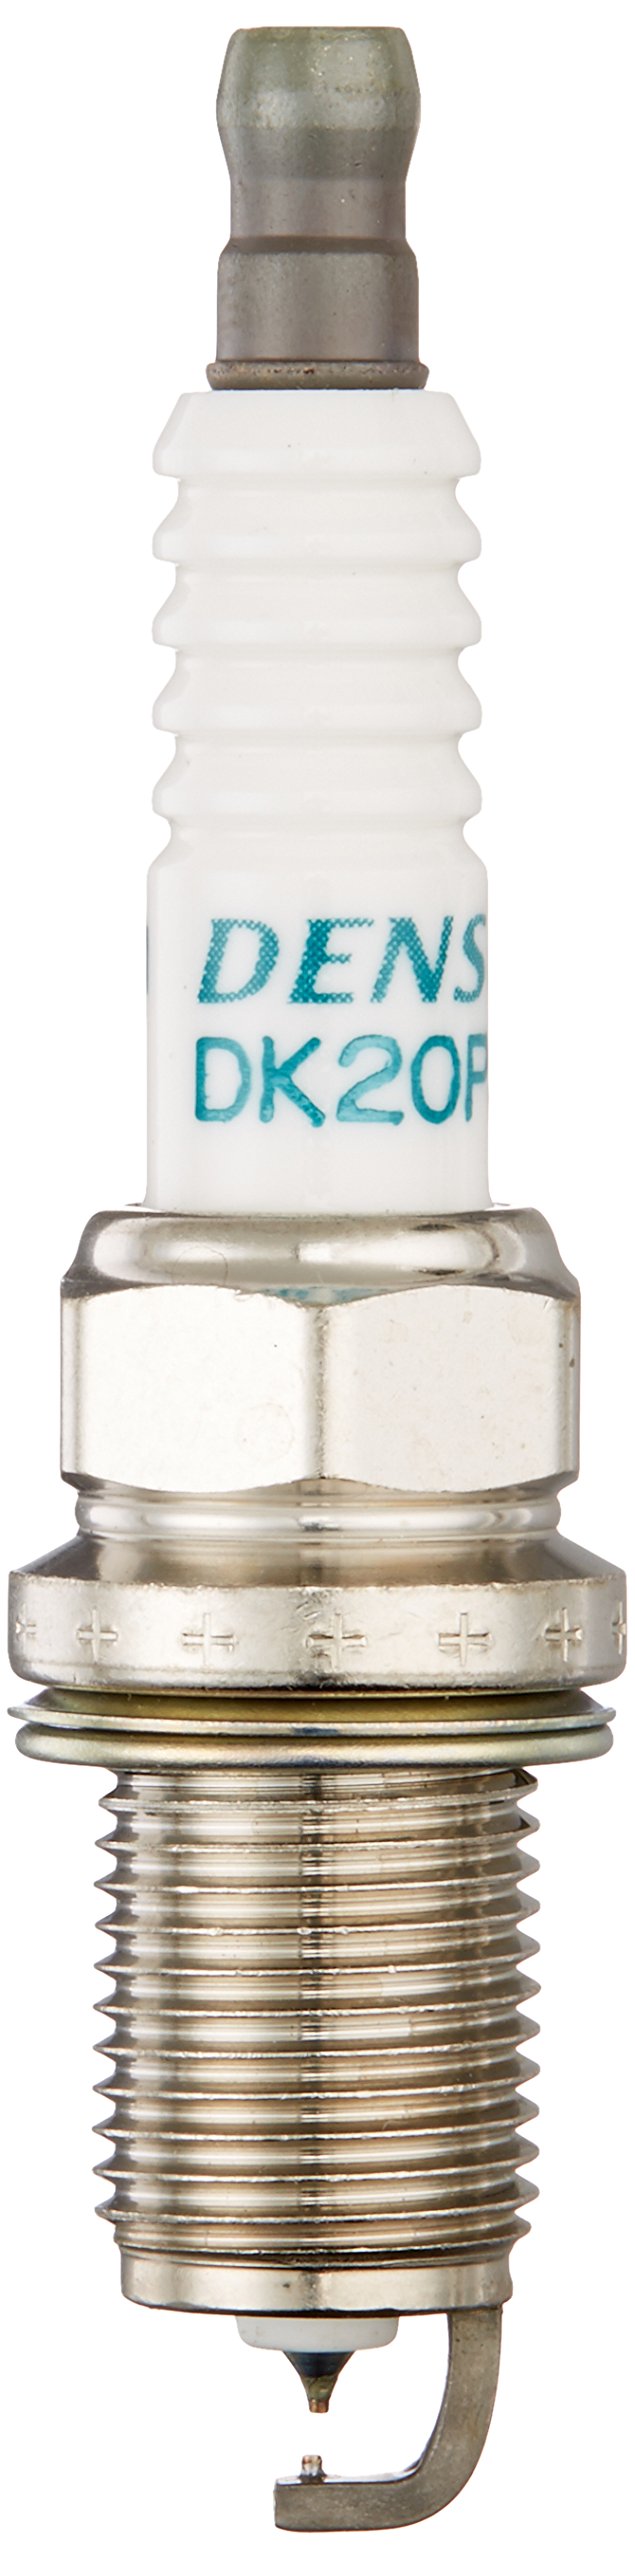 Denso DK20PR-D13 Zündkerze von Denso